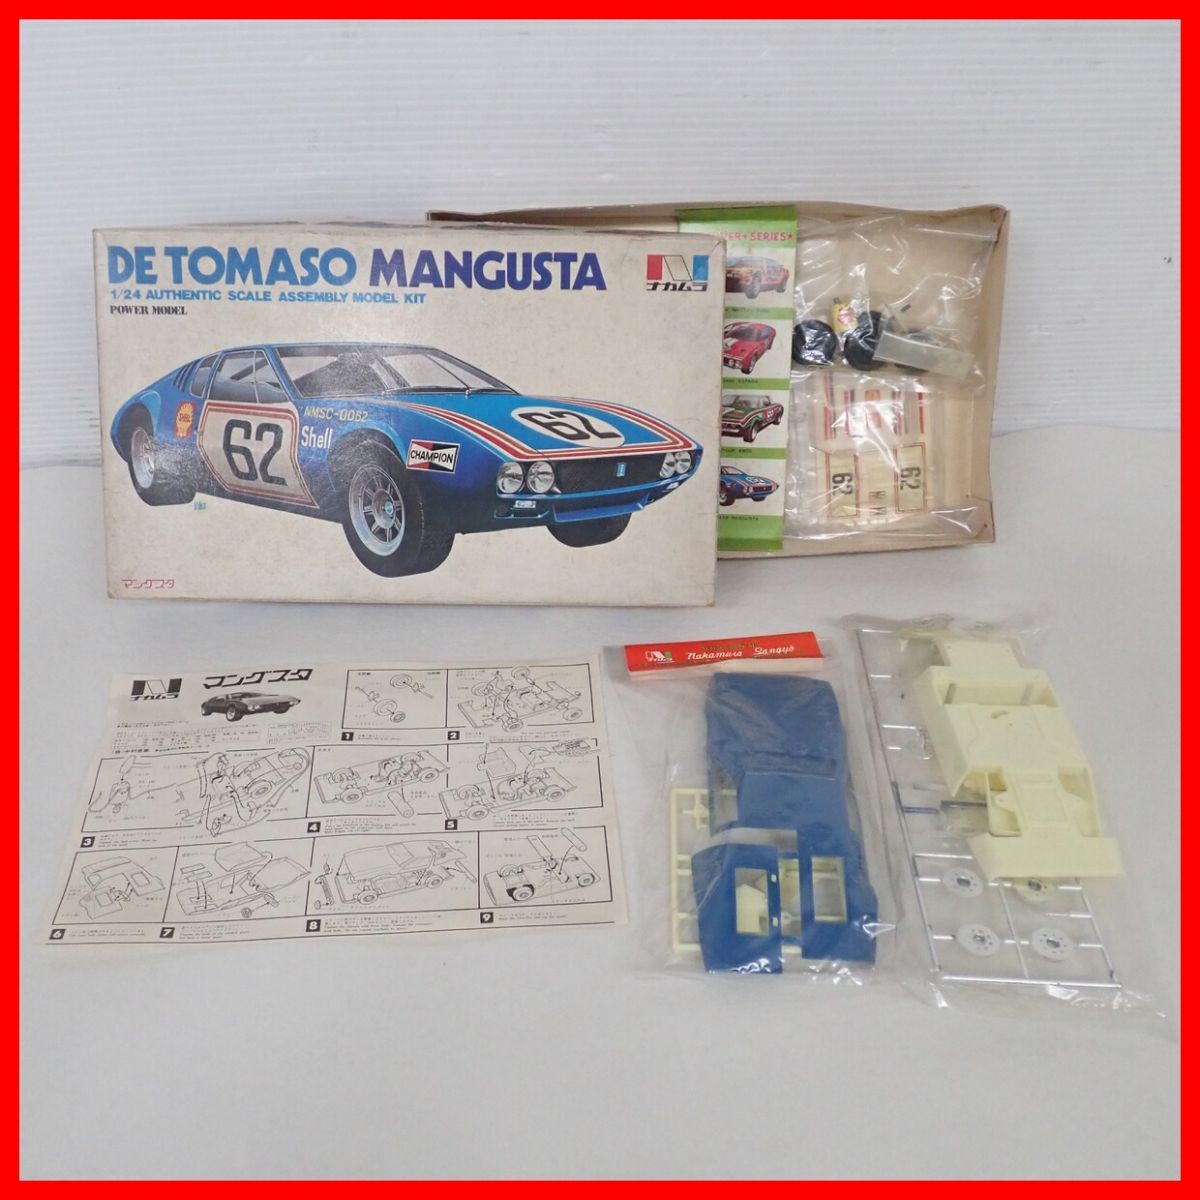 * not yet constructed naka blur 1/24te* Tomaso man g start #62 DE TOMASO MANGUSTA plastic model plastic model Nakamura industry [10